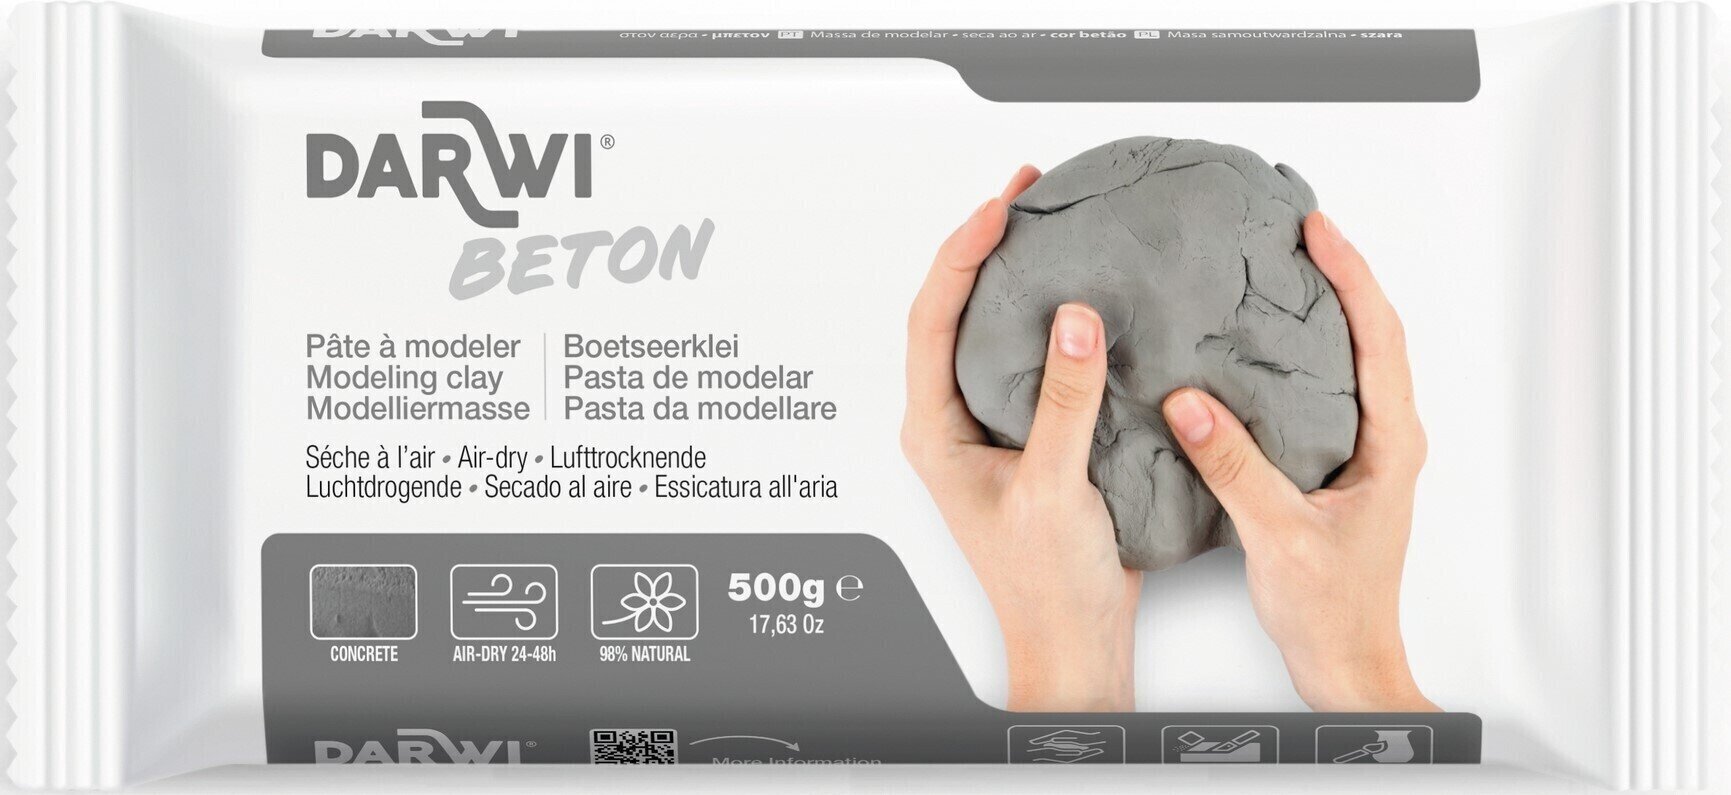 Self-Drying Clay Darwi The Self-Hardening Modelling Clay Beton Beton 500 g